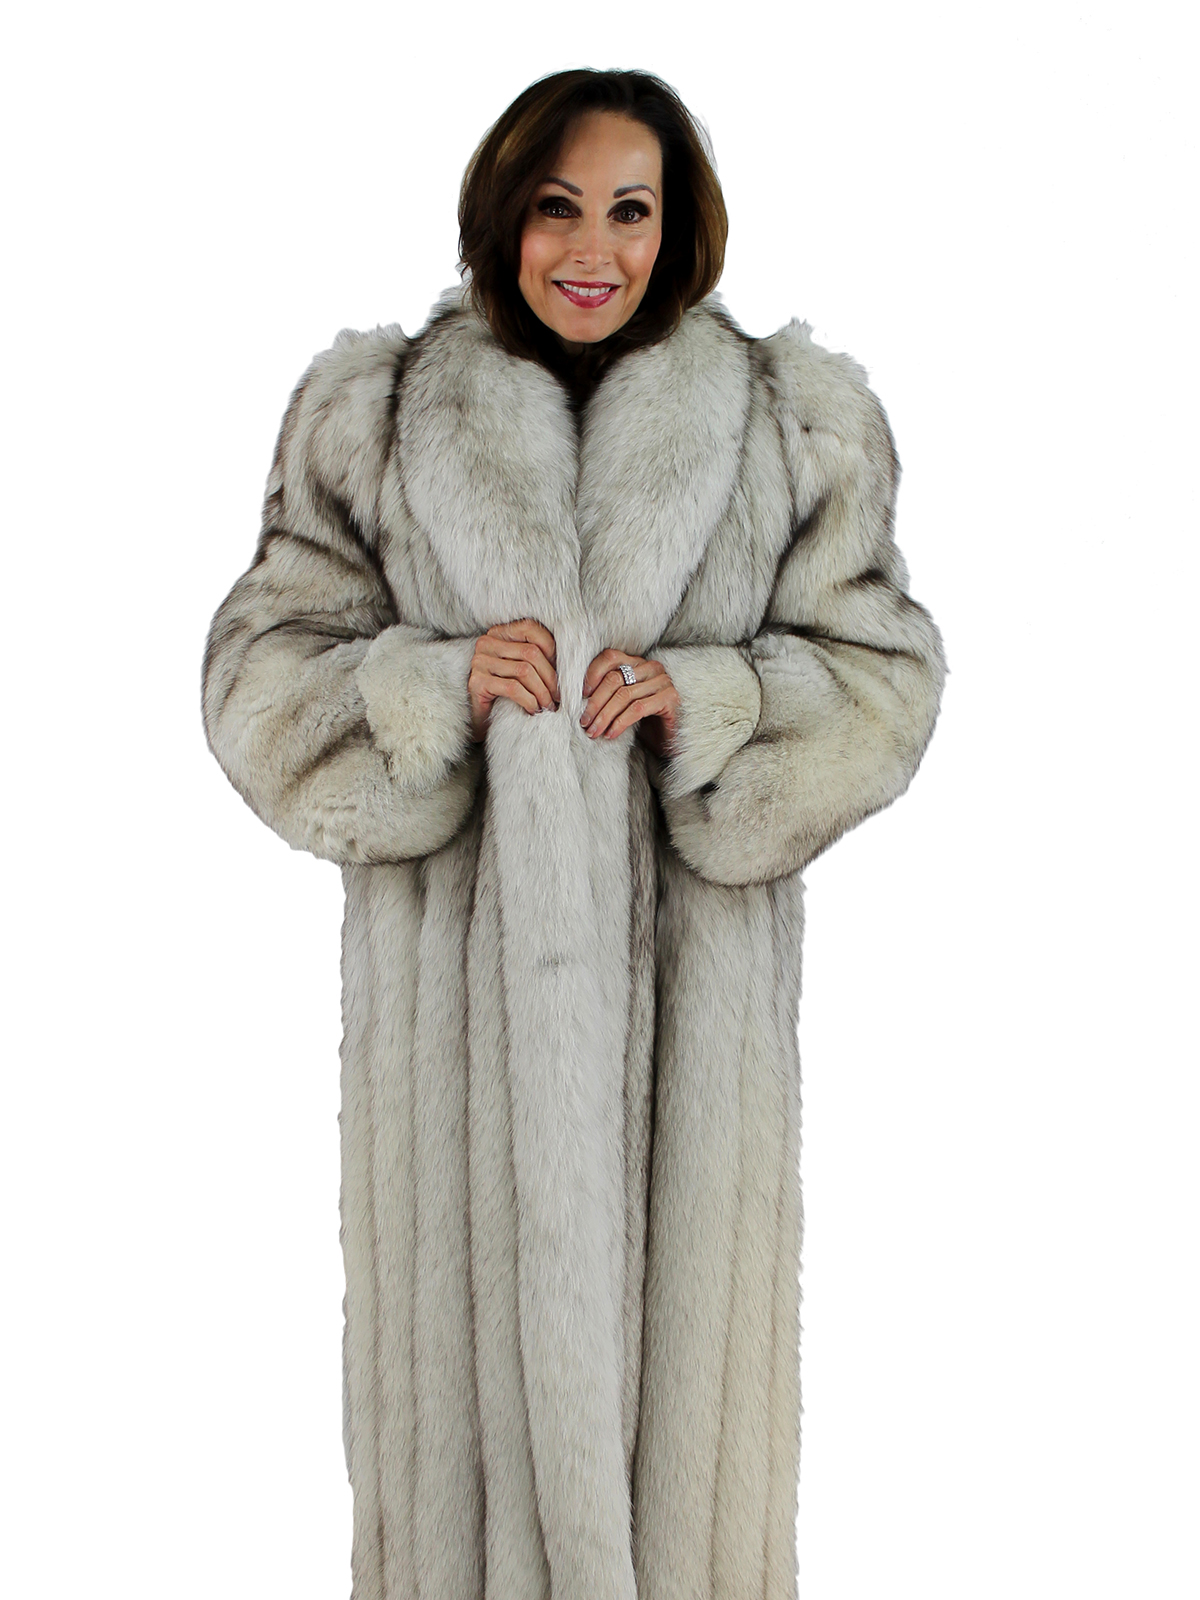 Blue Fox Fur Coat - Women's Large| Estate Furs